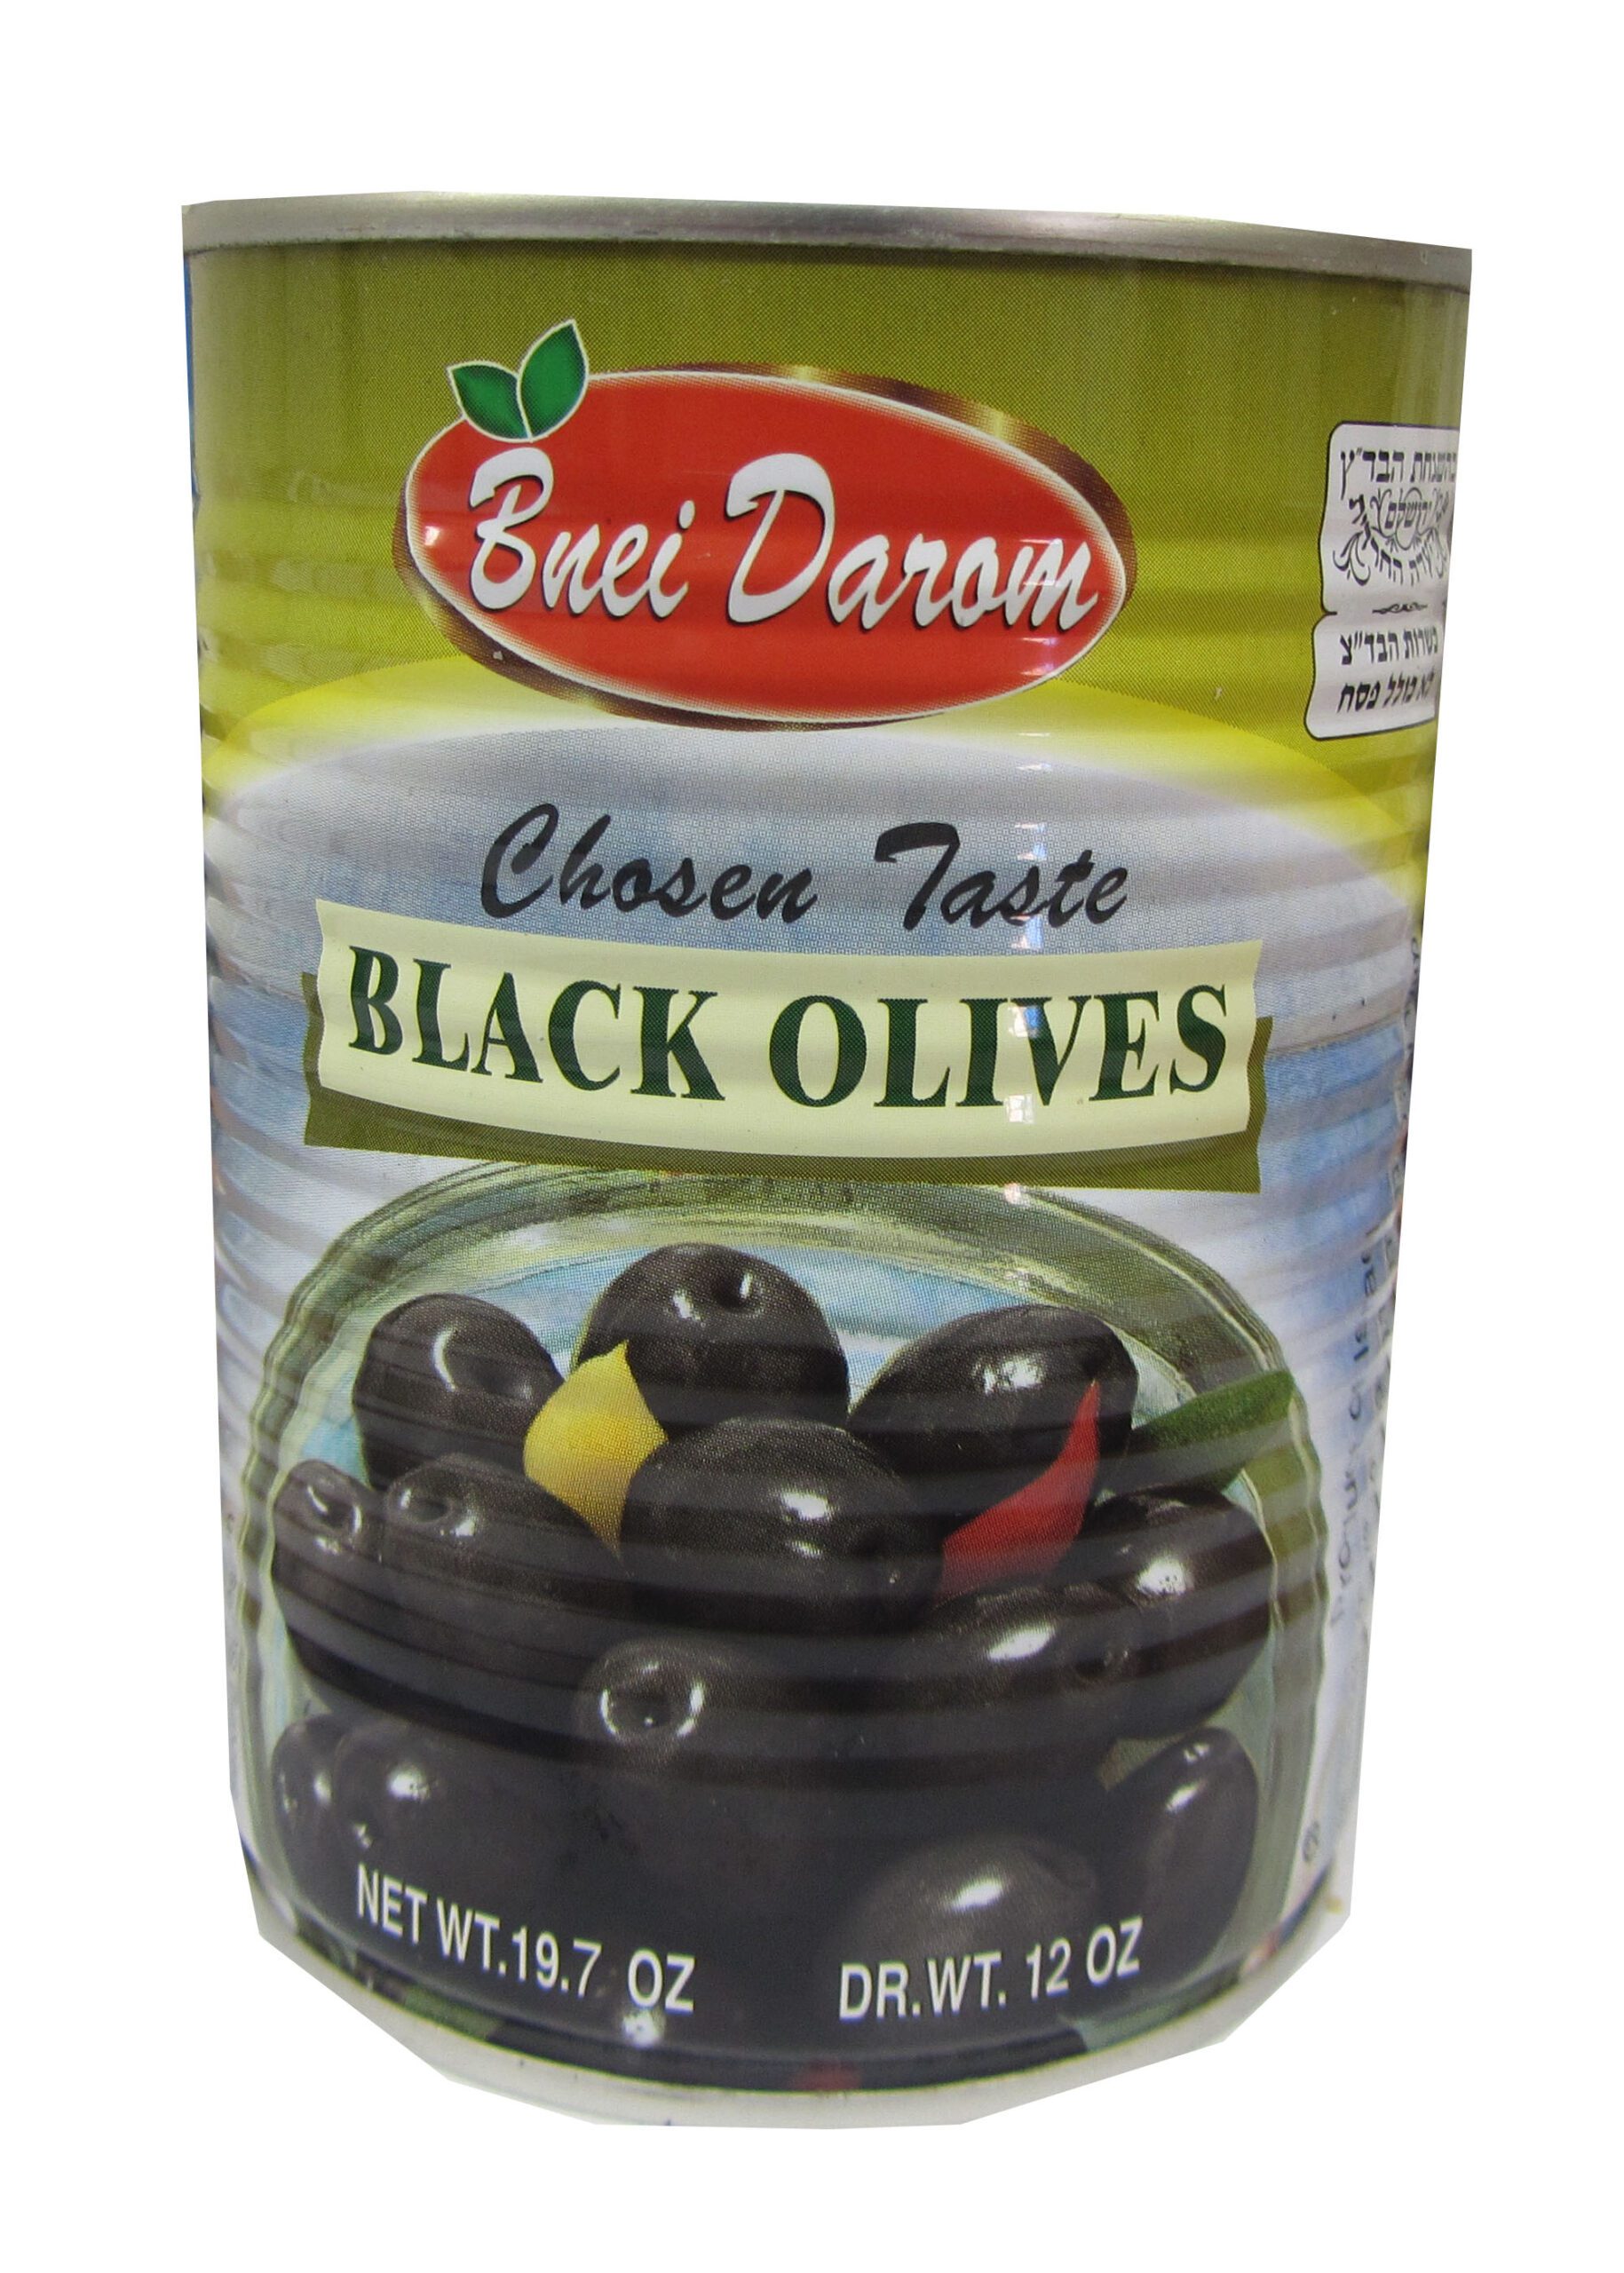 BNEI DAROM BLACK OLIVES TINS